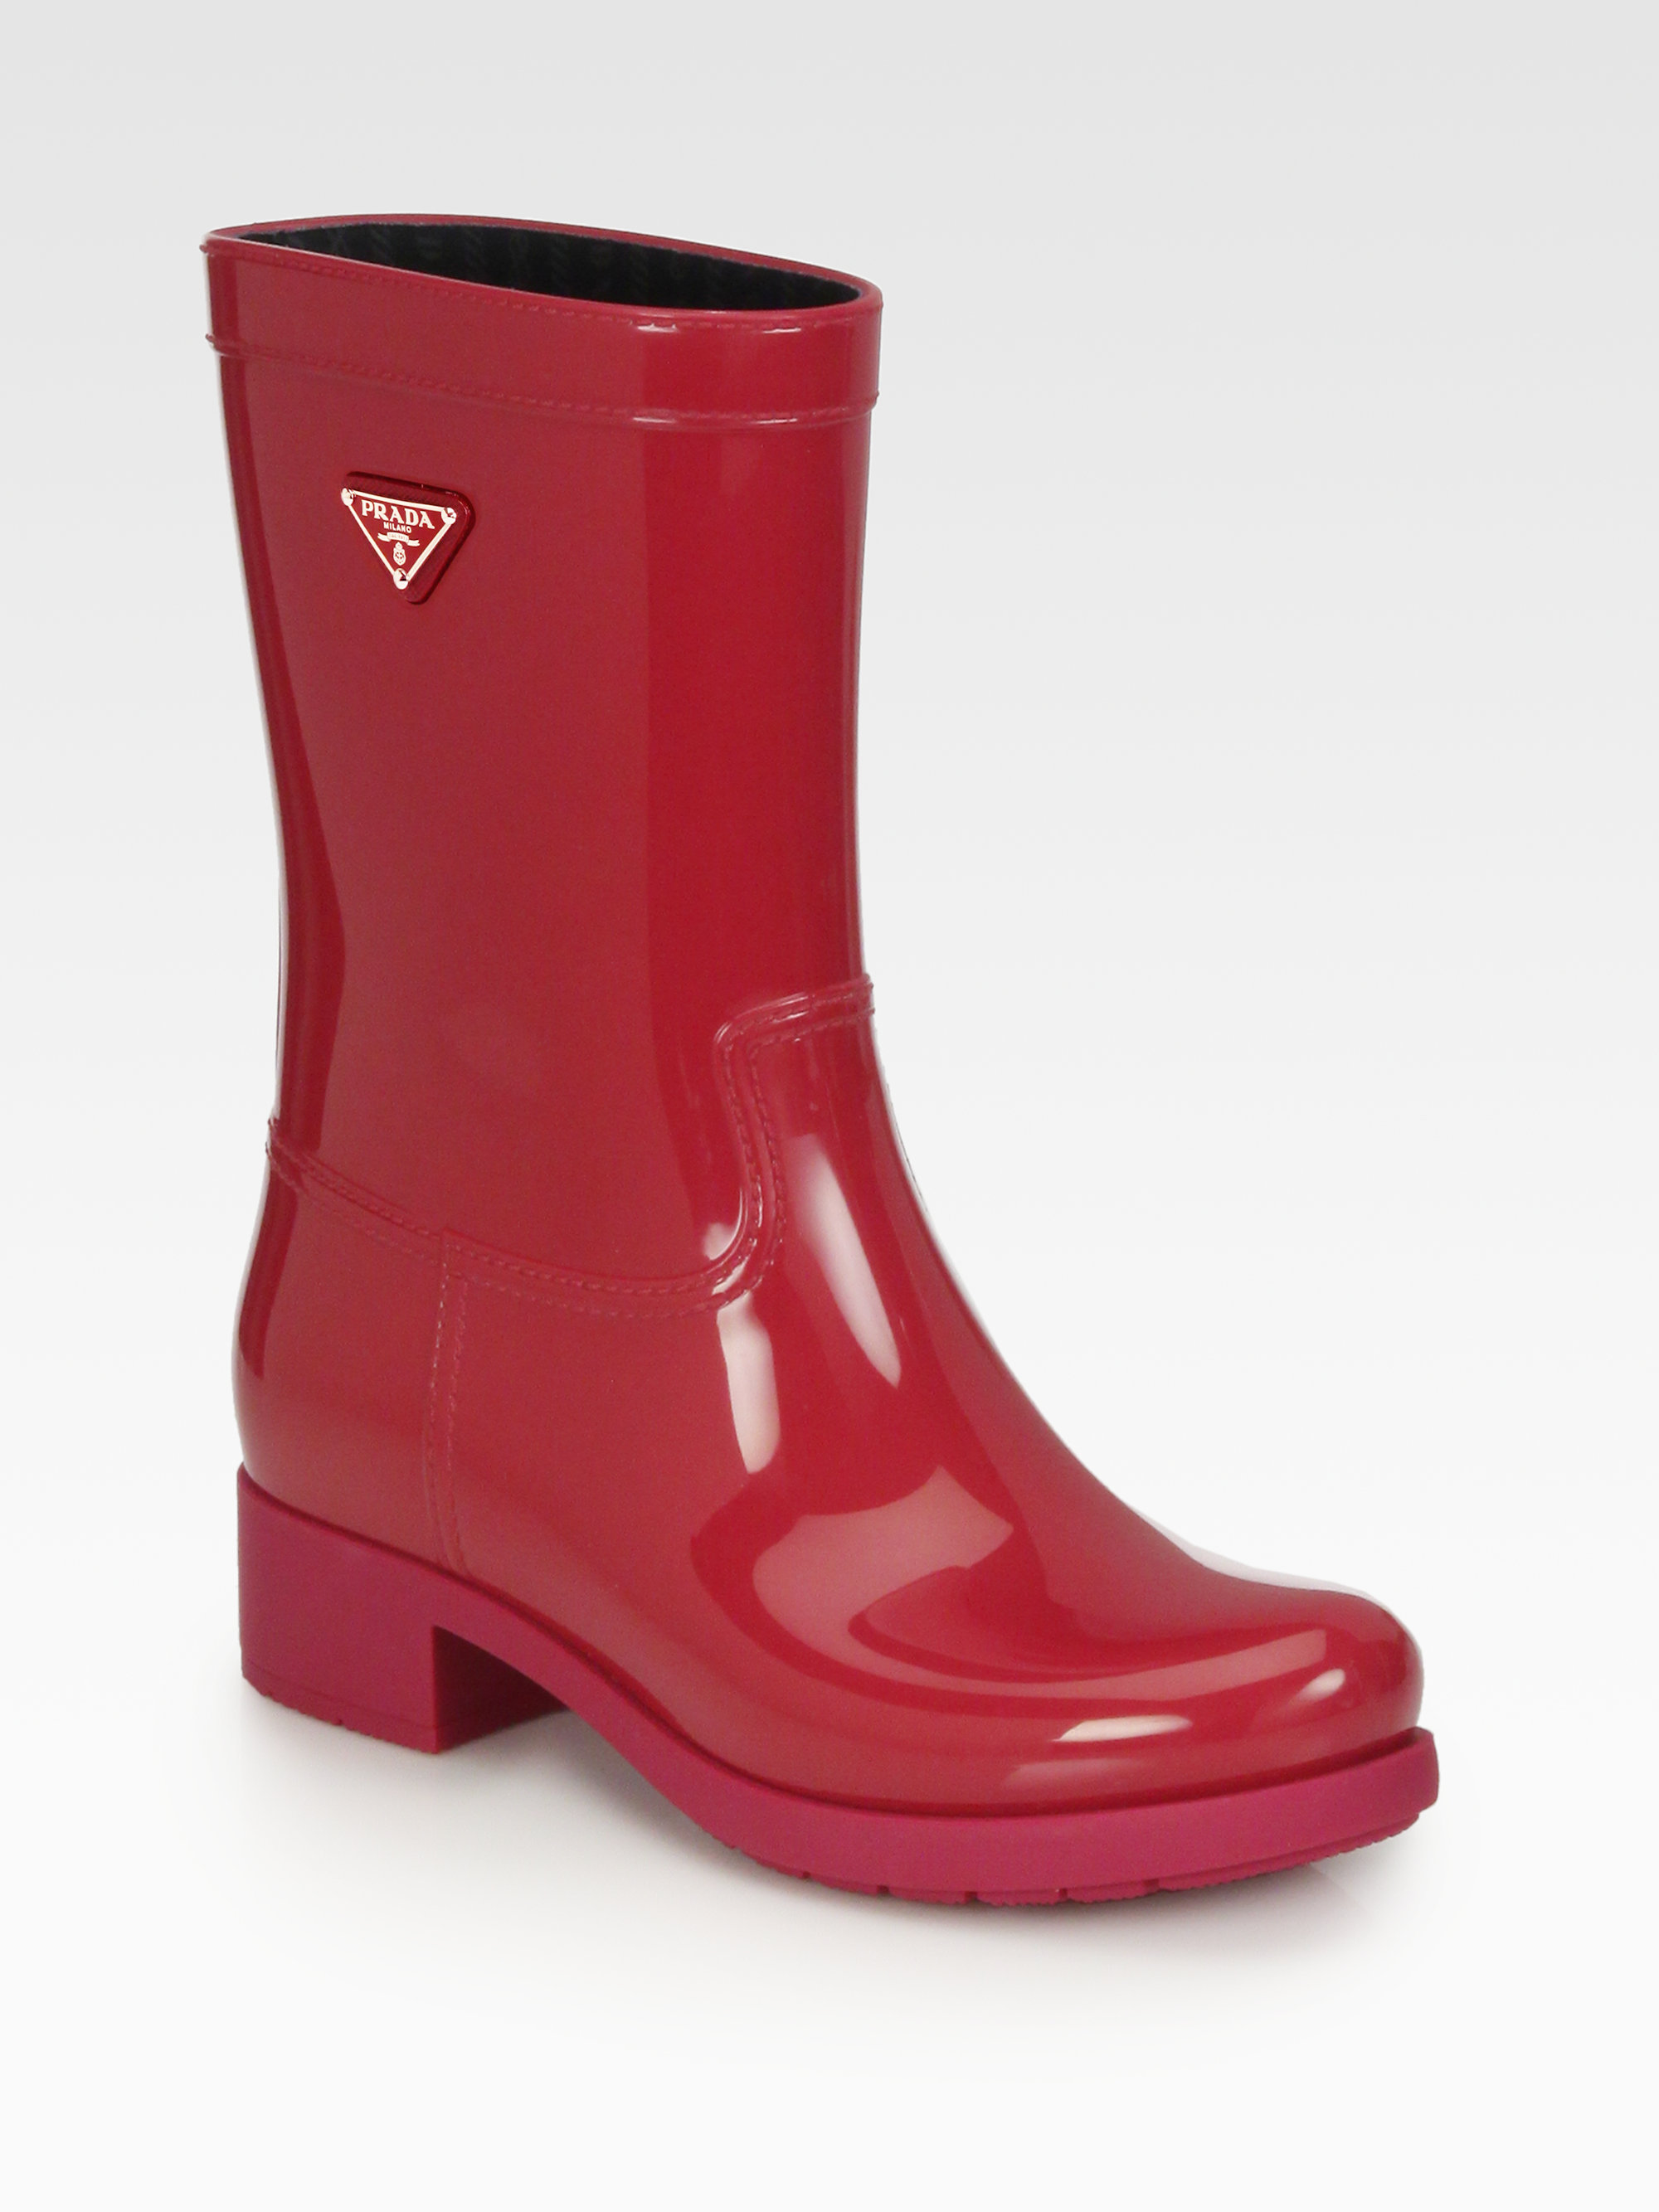 Prada Short Logo Rain Boots in Red | Lyst